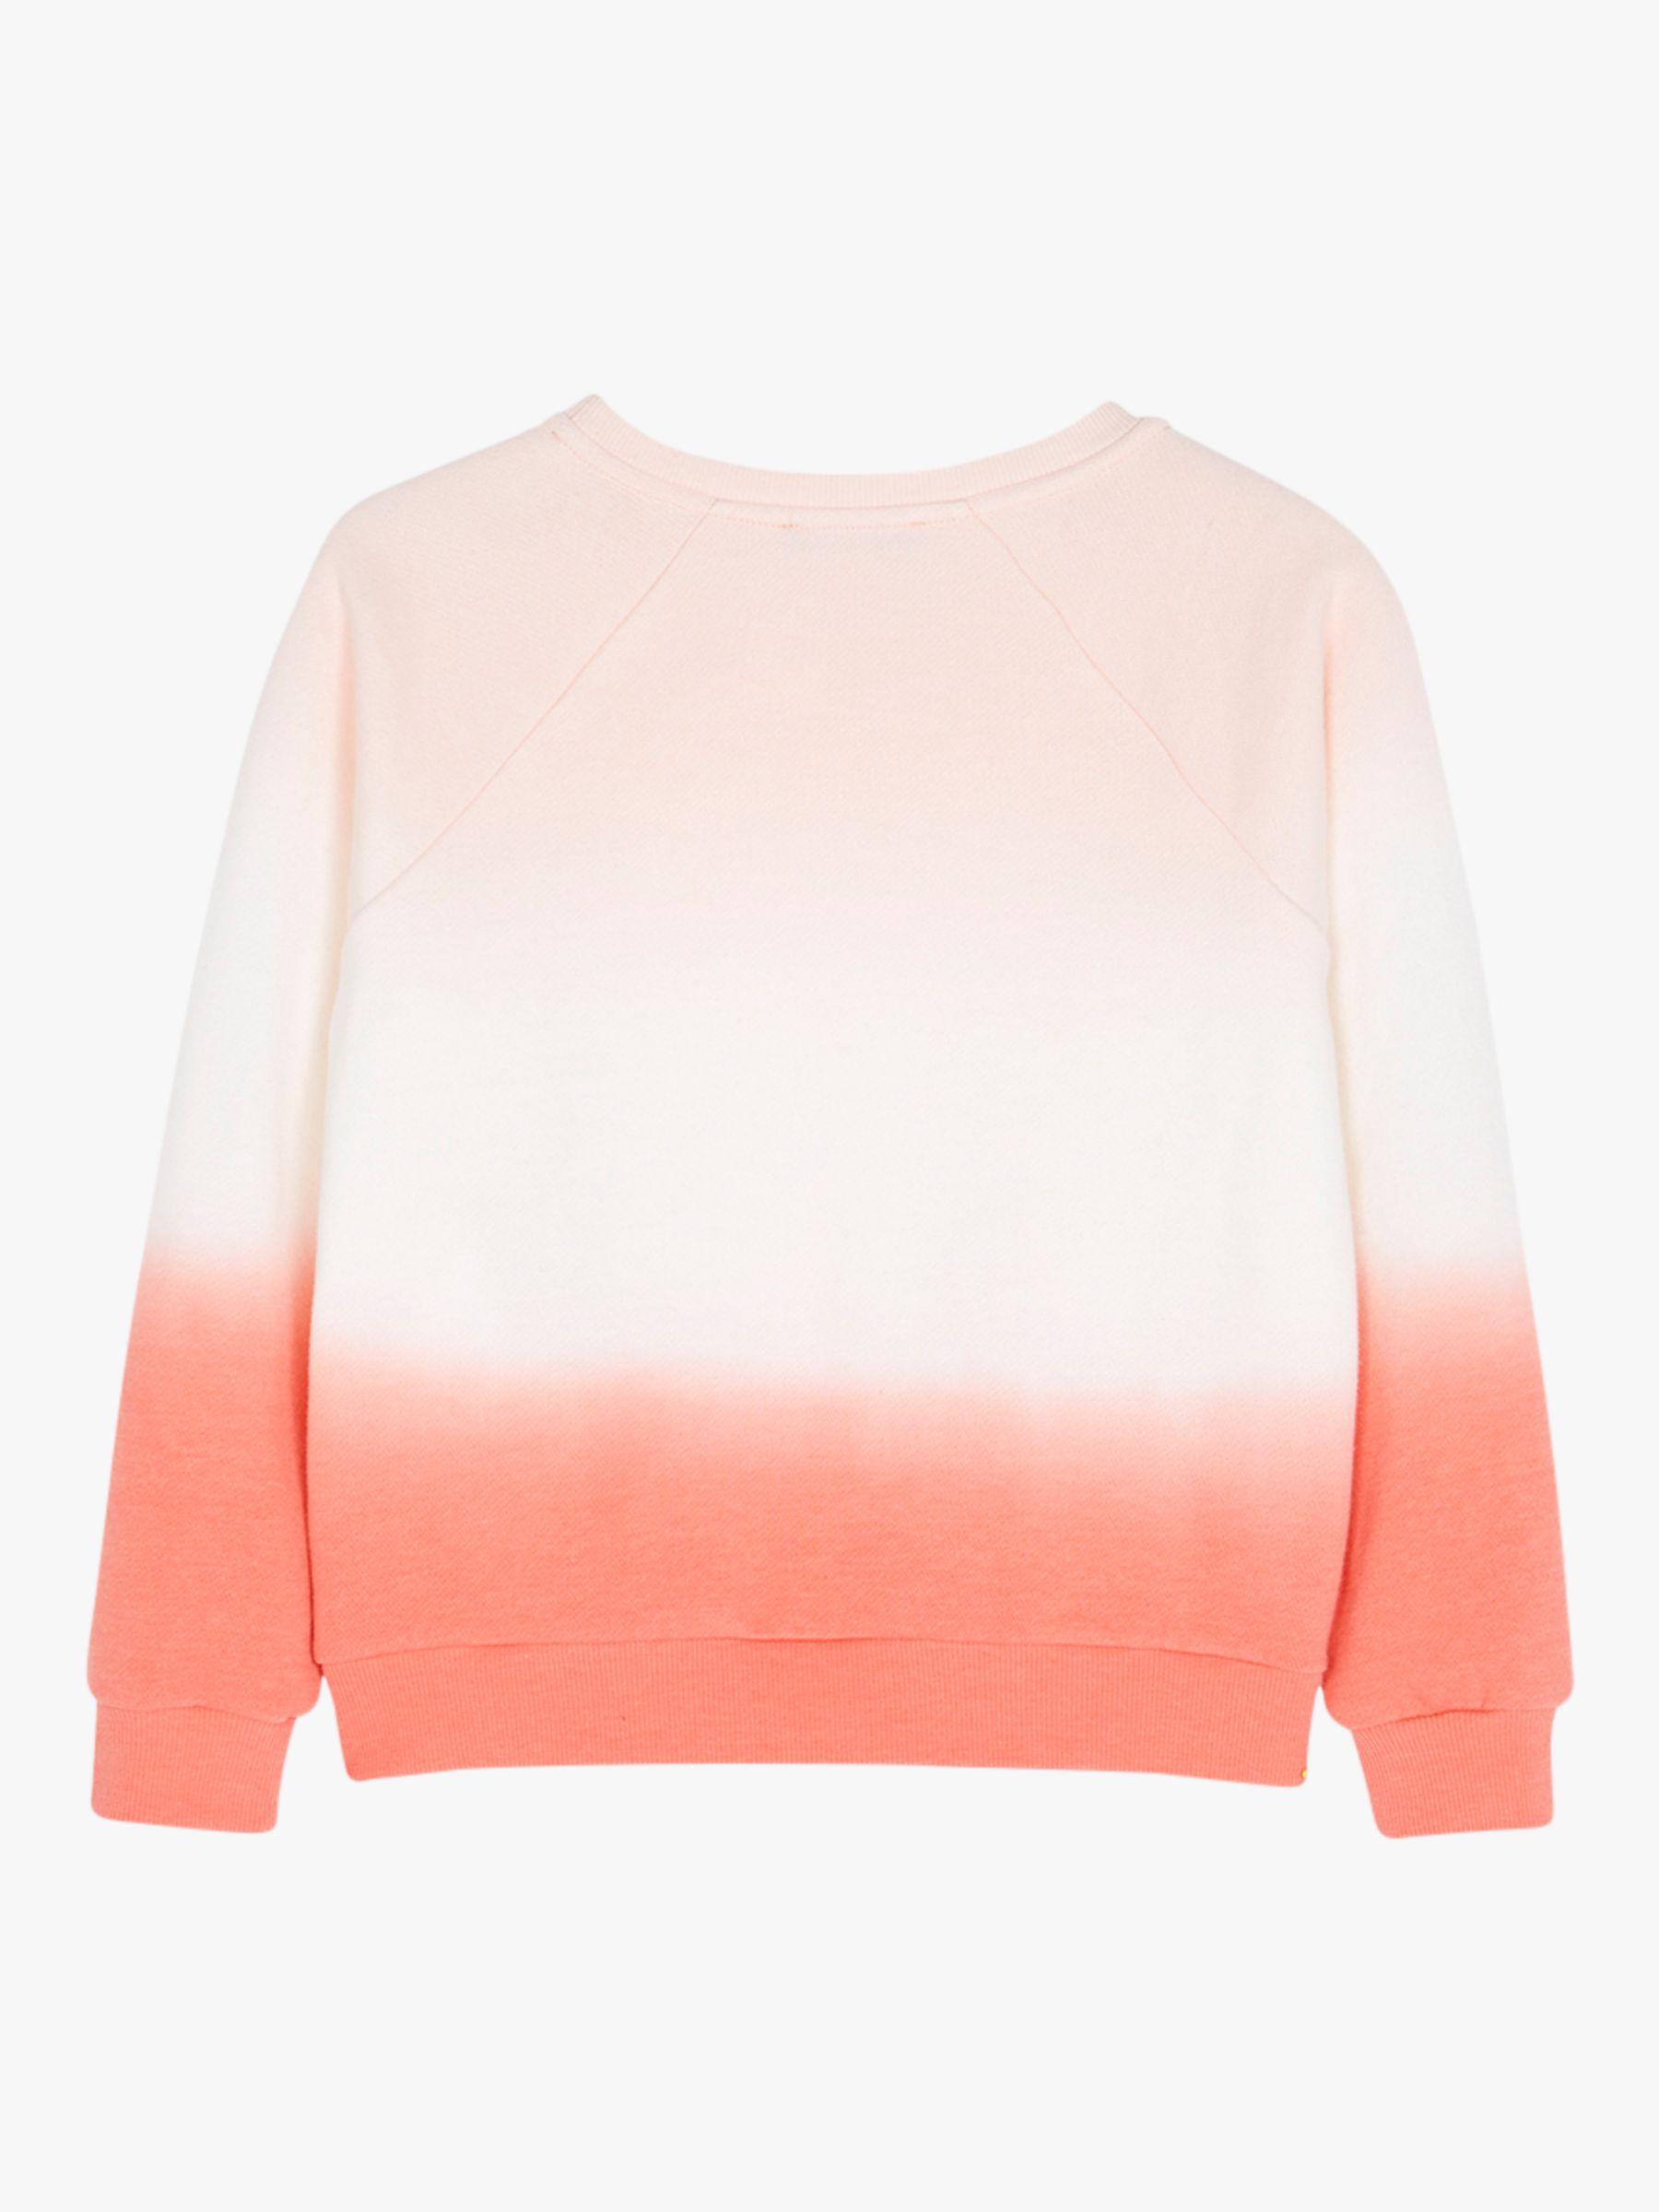 Mintie by Mint Velvet Girls' Dip Dye Sweatshirt, Pink